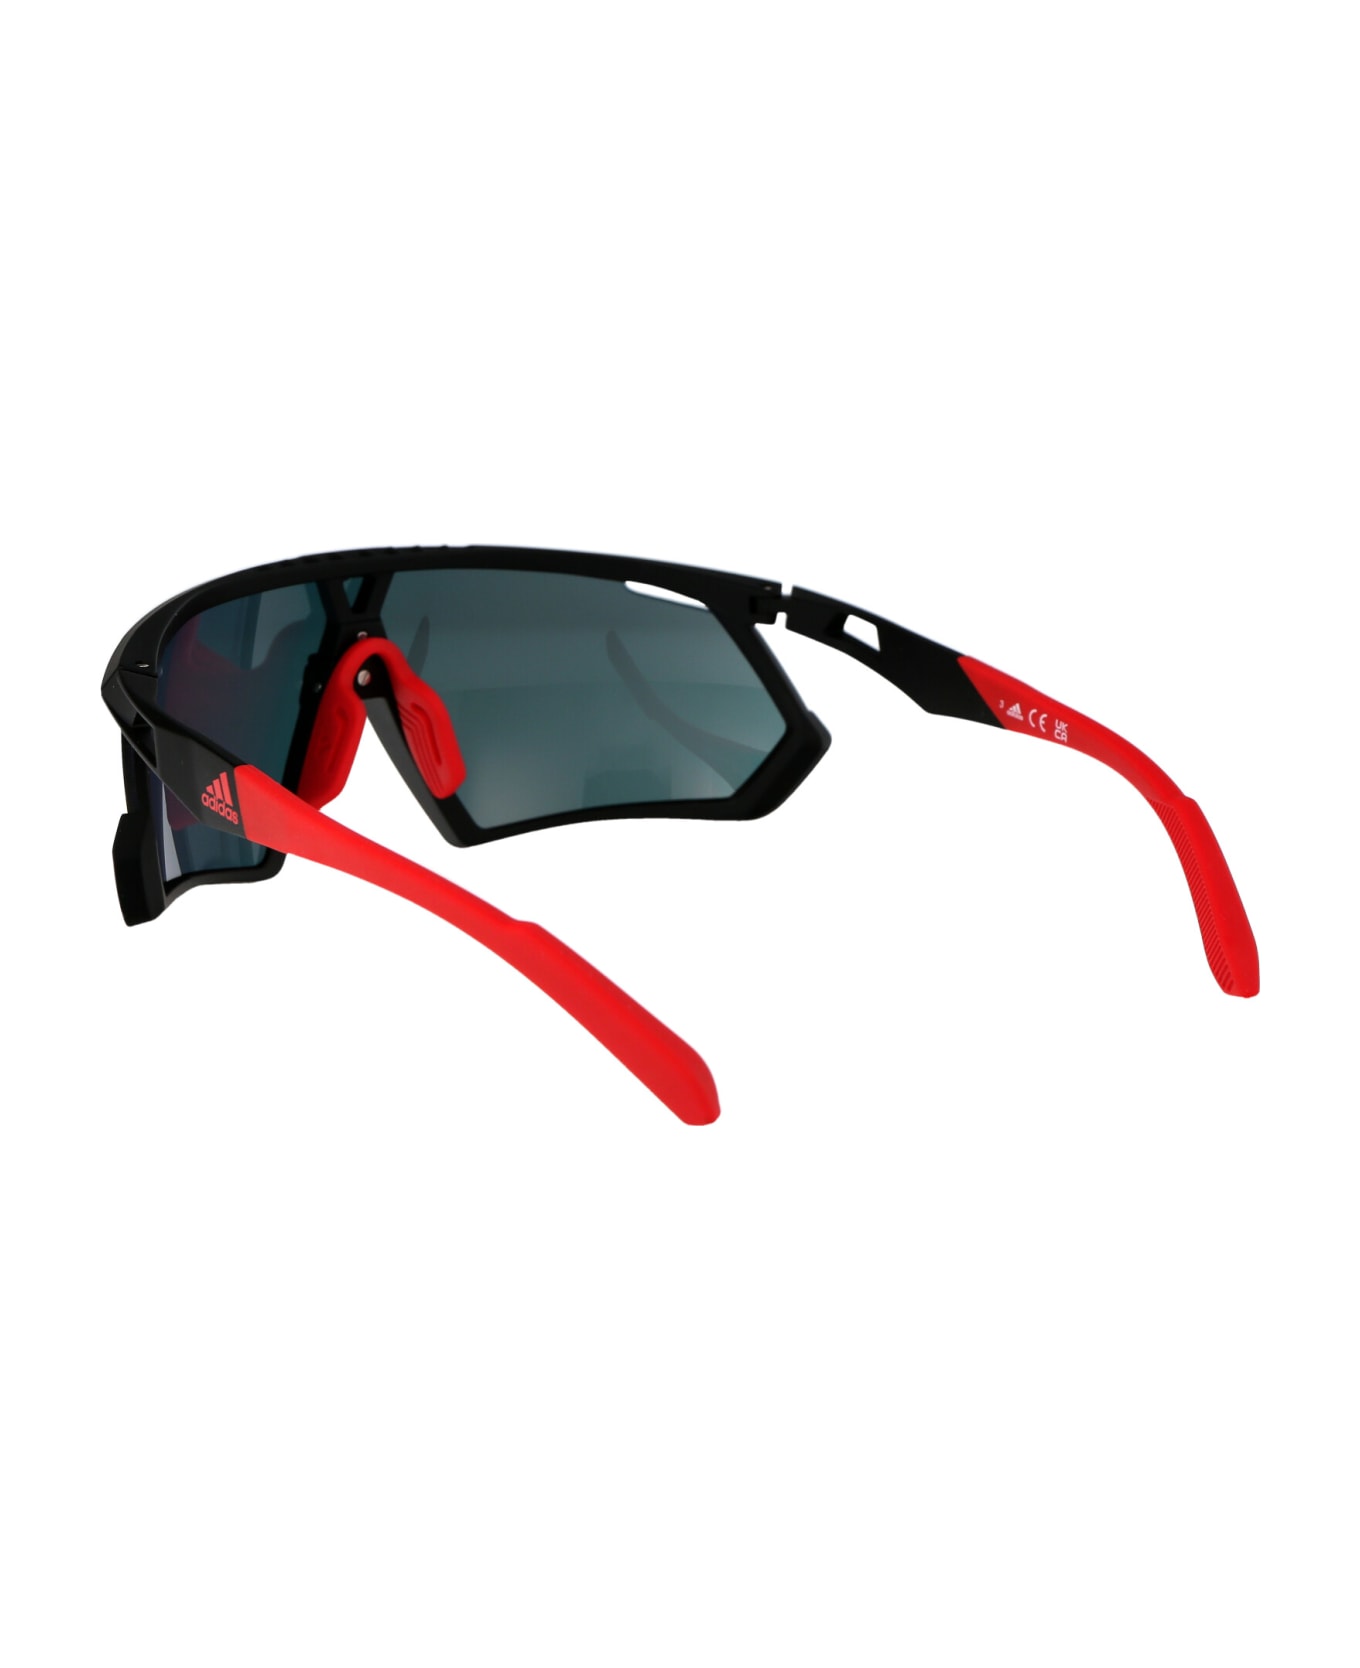 Adidas Sp0054 Sunglasses - 02U Nero Opaco/Bordeaux Specchiato